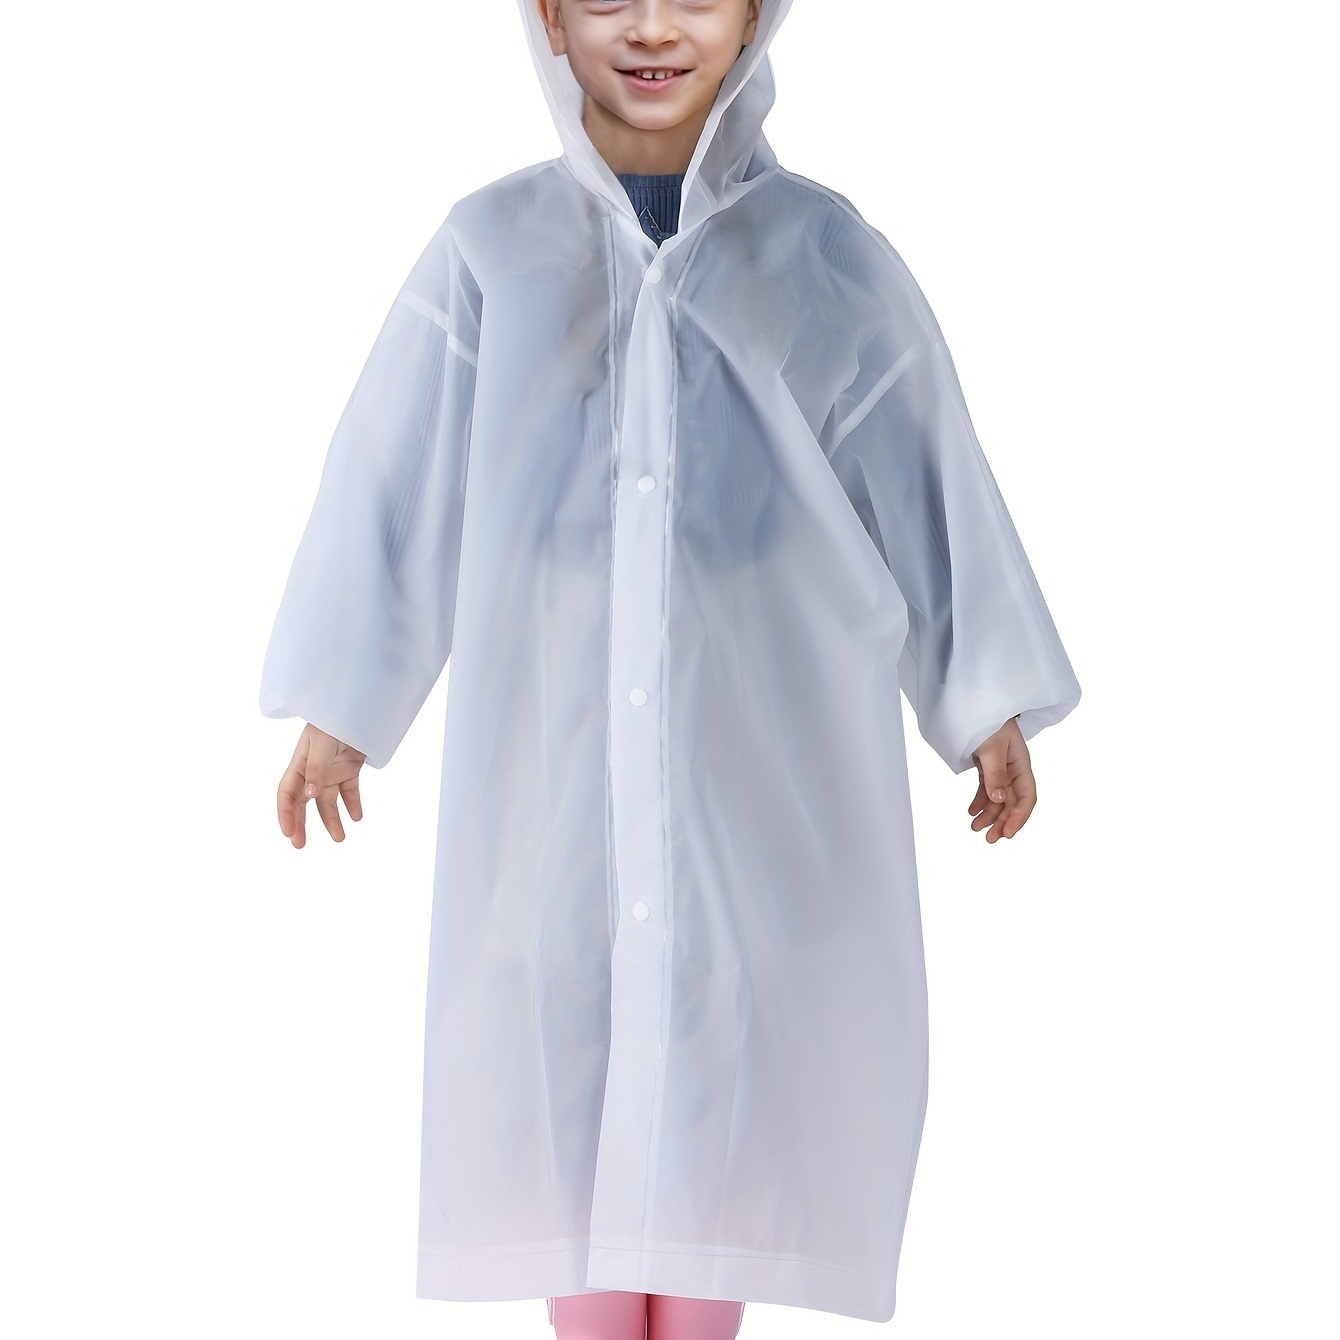 

Boys Girls Casual Reusable Waterproof Hooded Raincoat, Long Sleeve Hooded Rain Poncho Jacket, Boys Rainsuit Outdoor